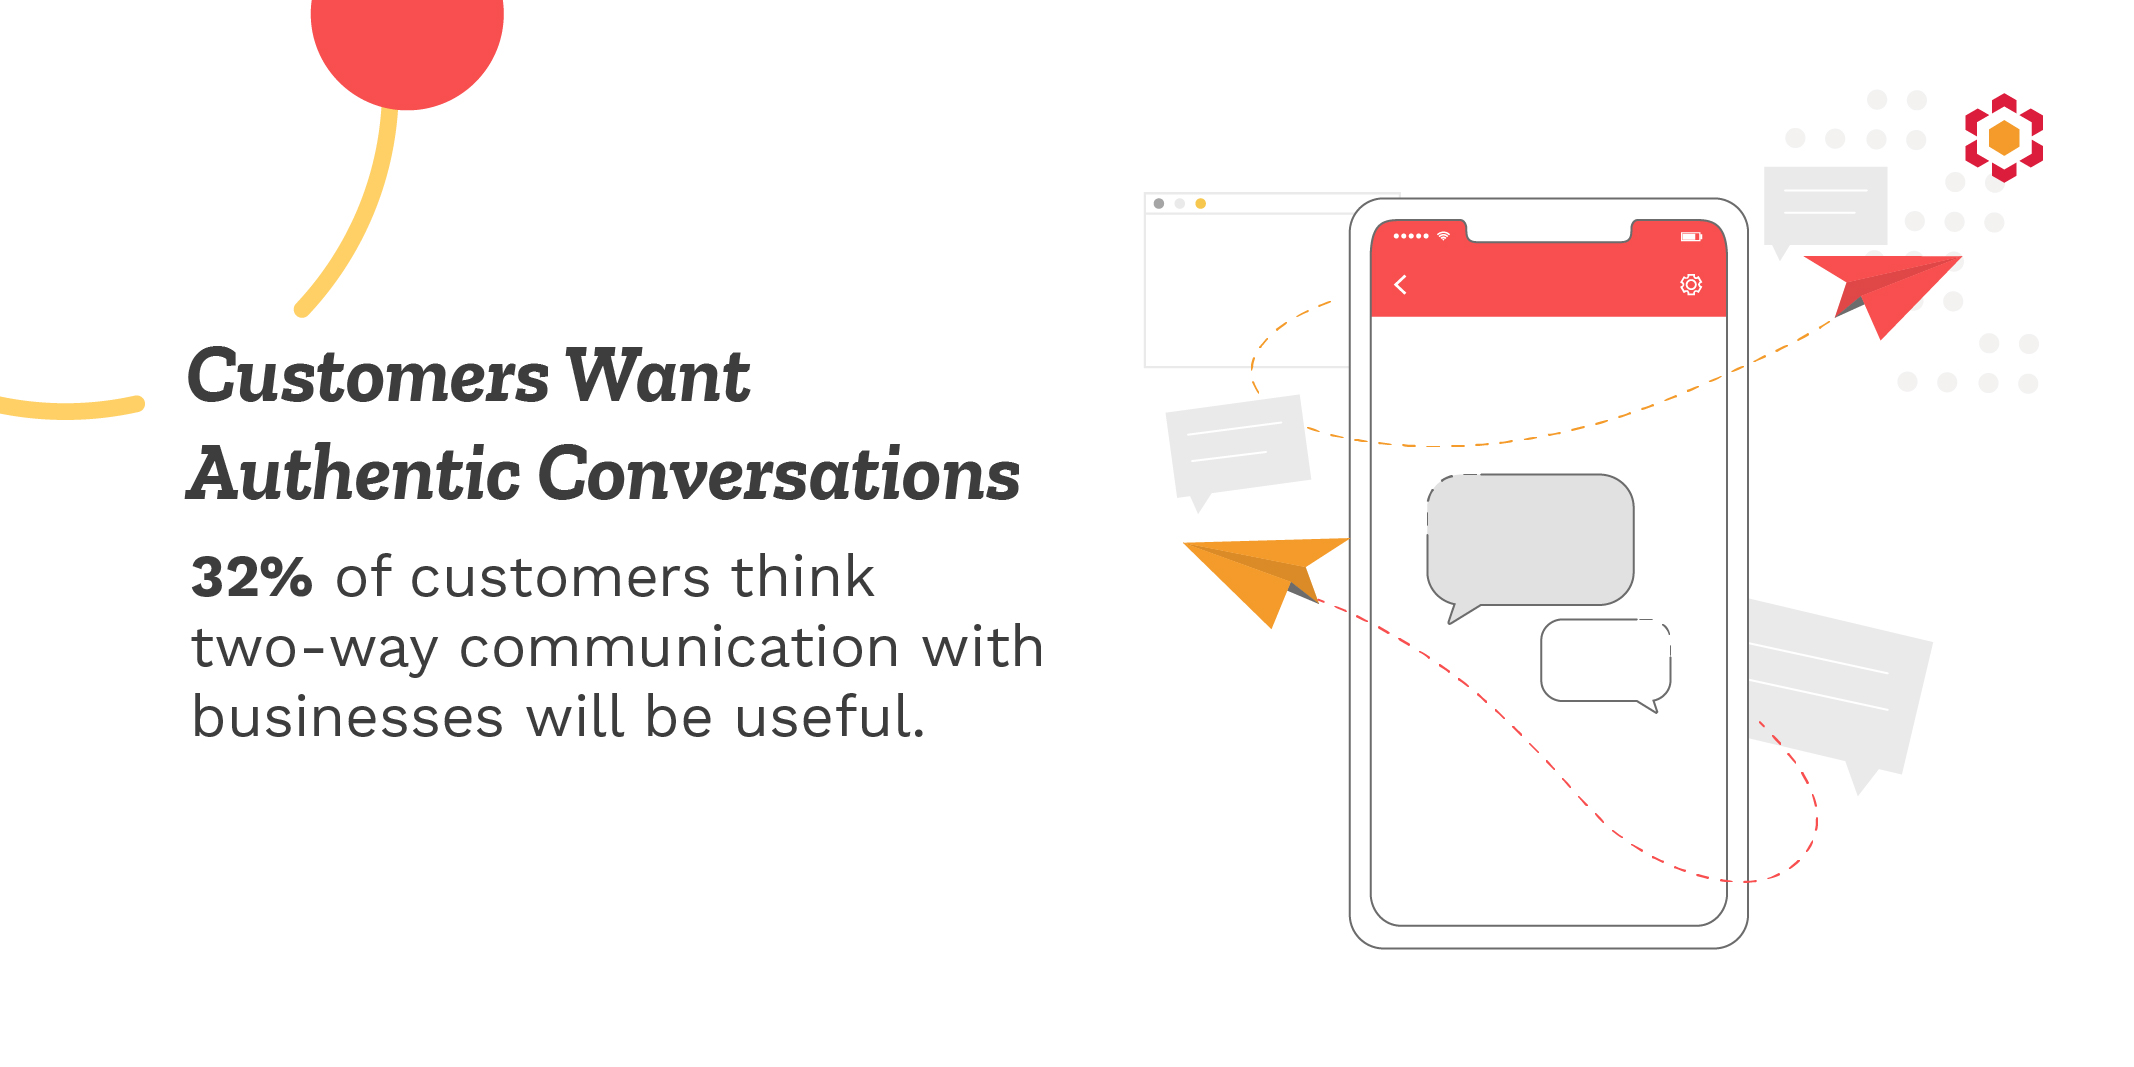 Conversational 2-way Messaging